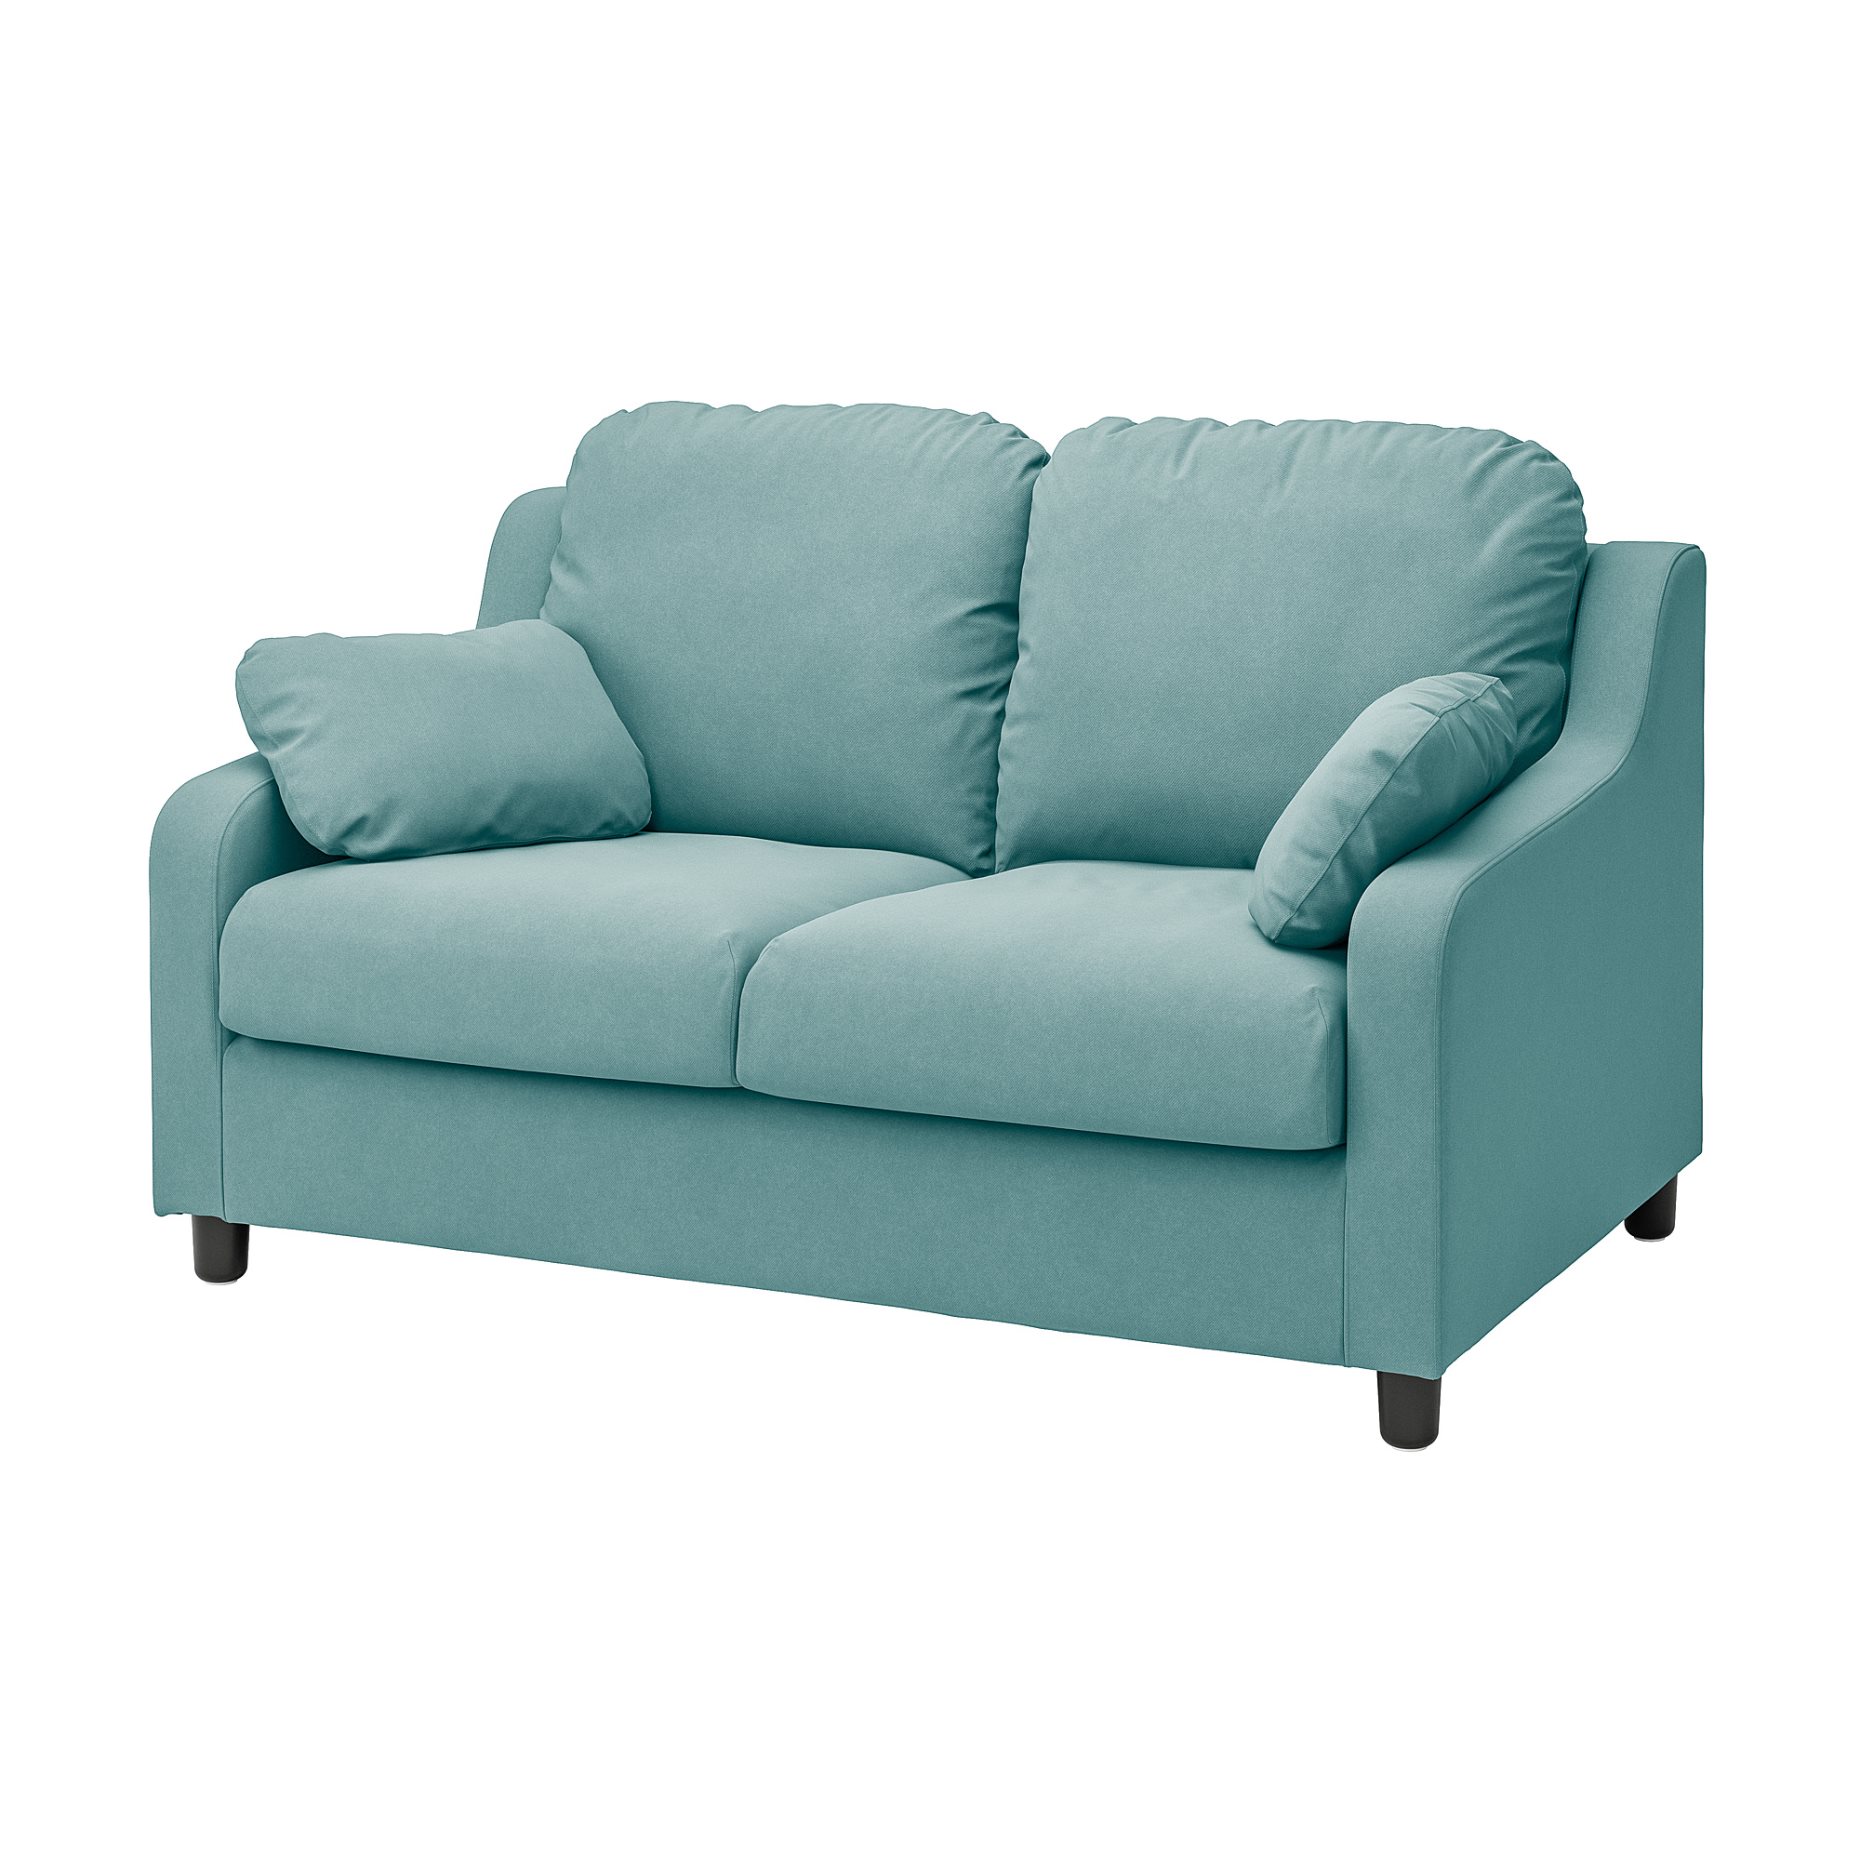 VINLIDEN, cover for 2-seat sofa, 004.437.38